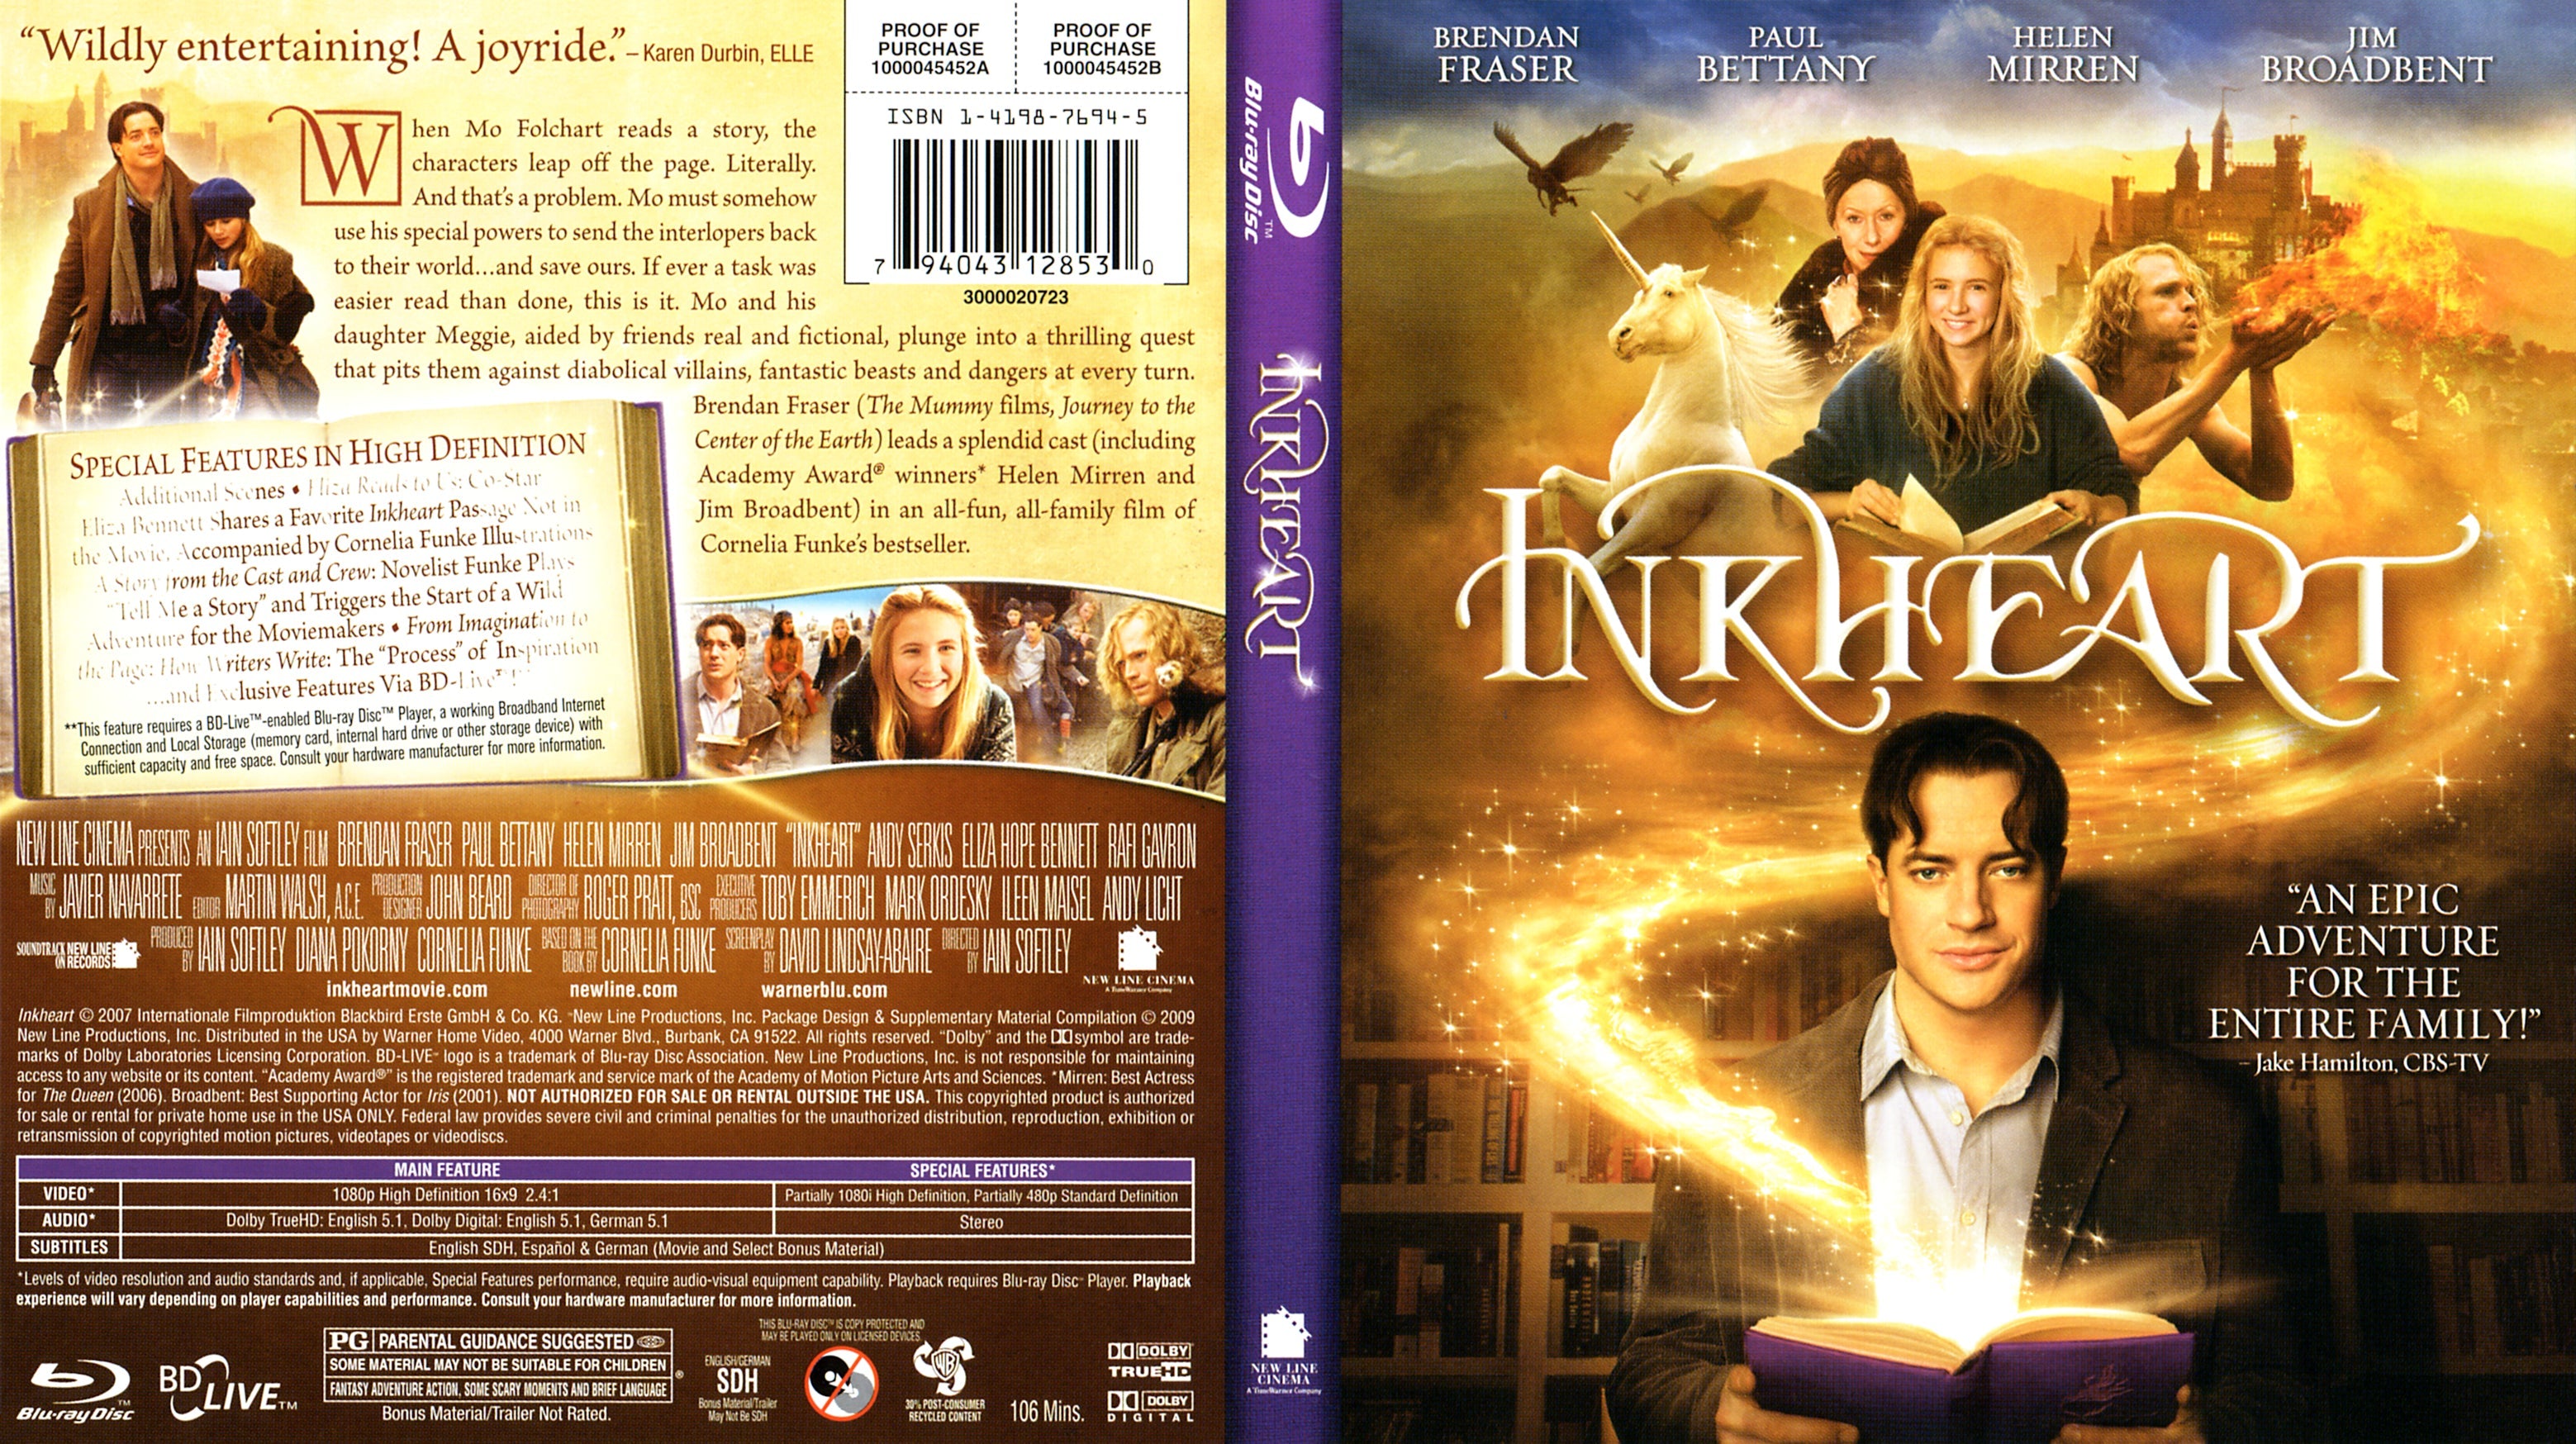 Inkheart [Blu-ray]